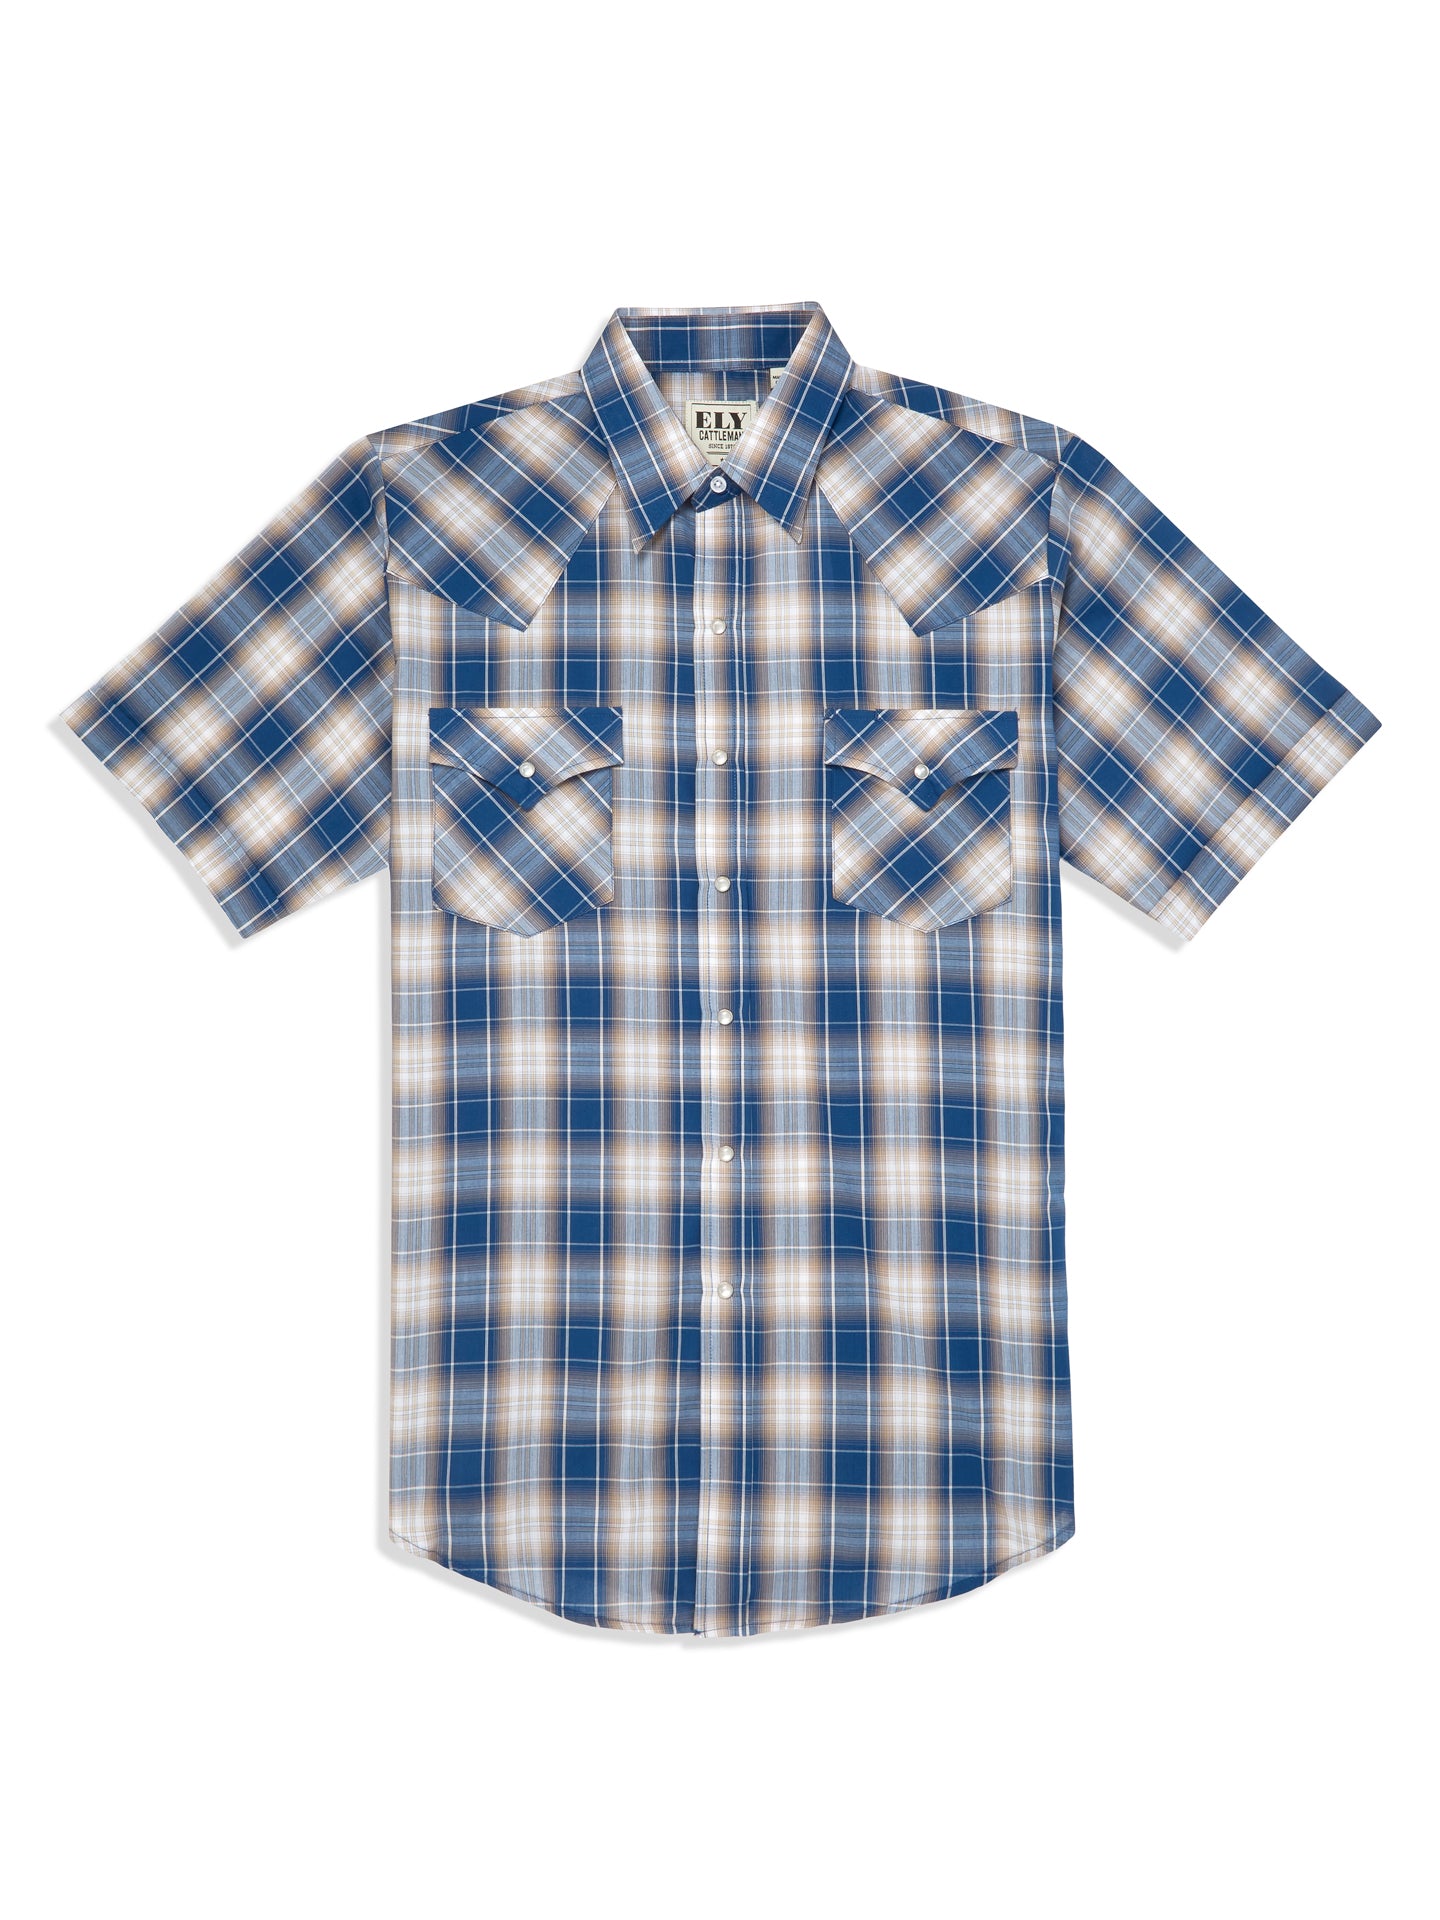 Mens Blue Plaid Flannel Long Sleeve Button-Down Shirt 2XLT 